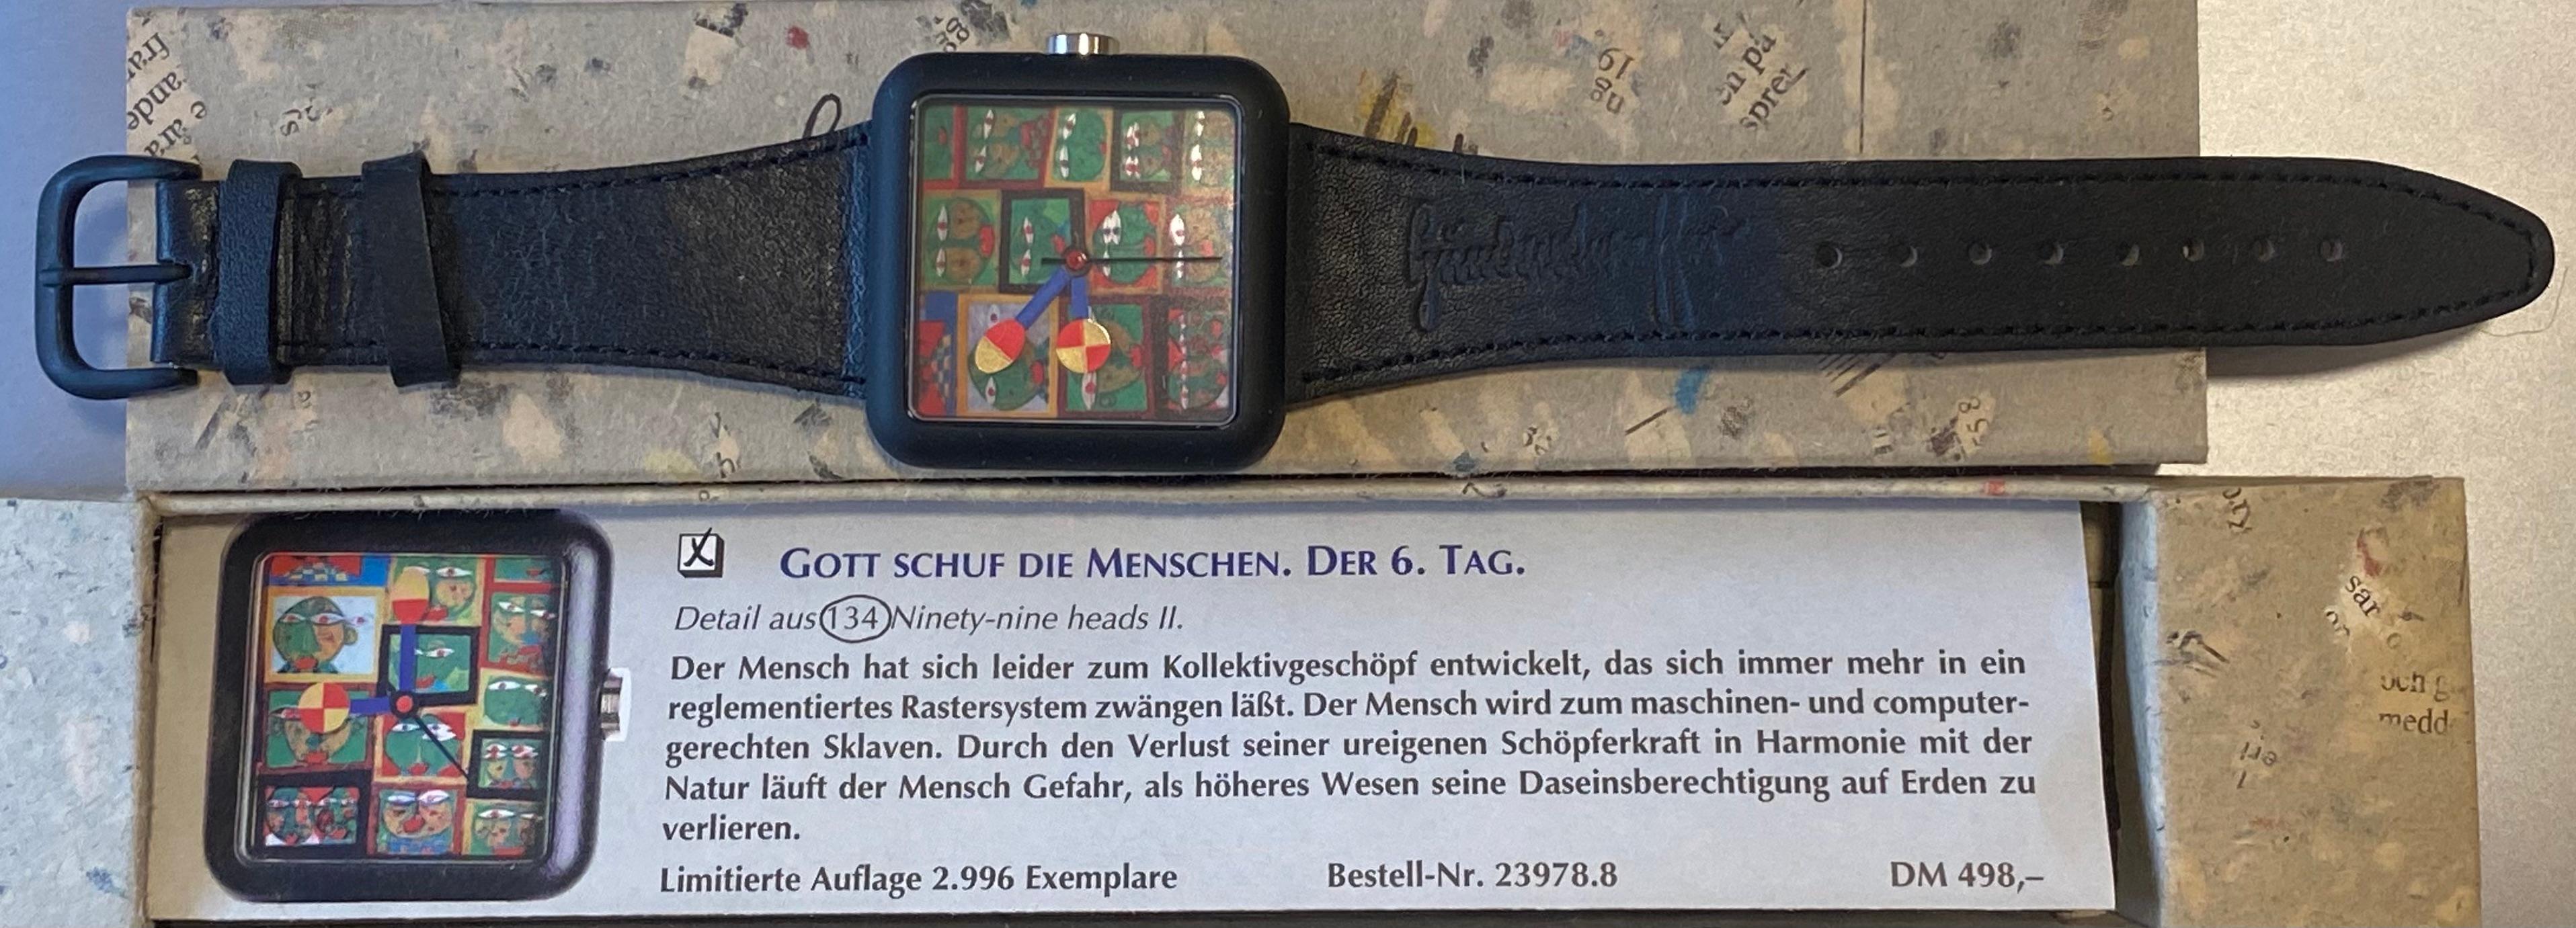 Watch 3 Designed by the Austrian Artist Hundertwasser, 1995 In Good Condition For Sale In Saint ouen, FR